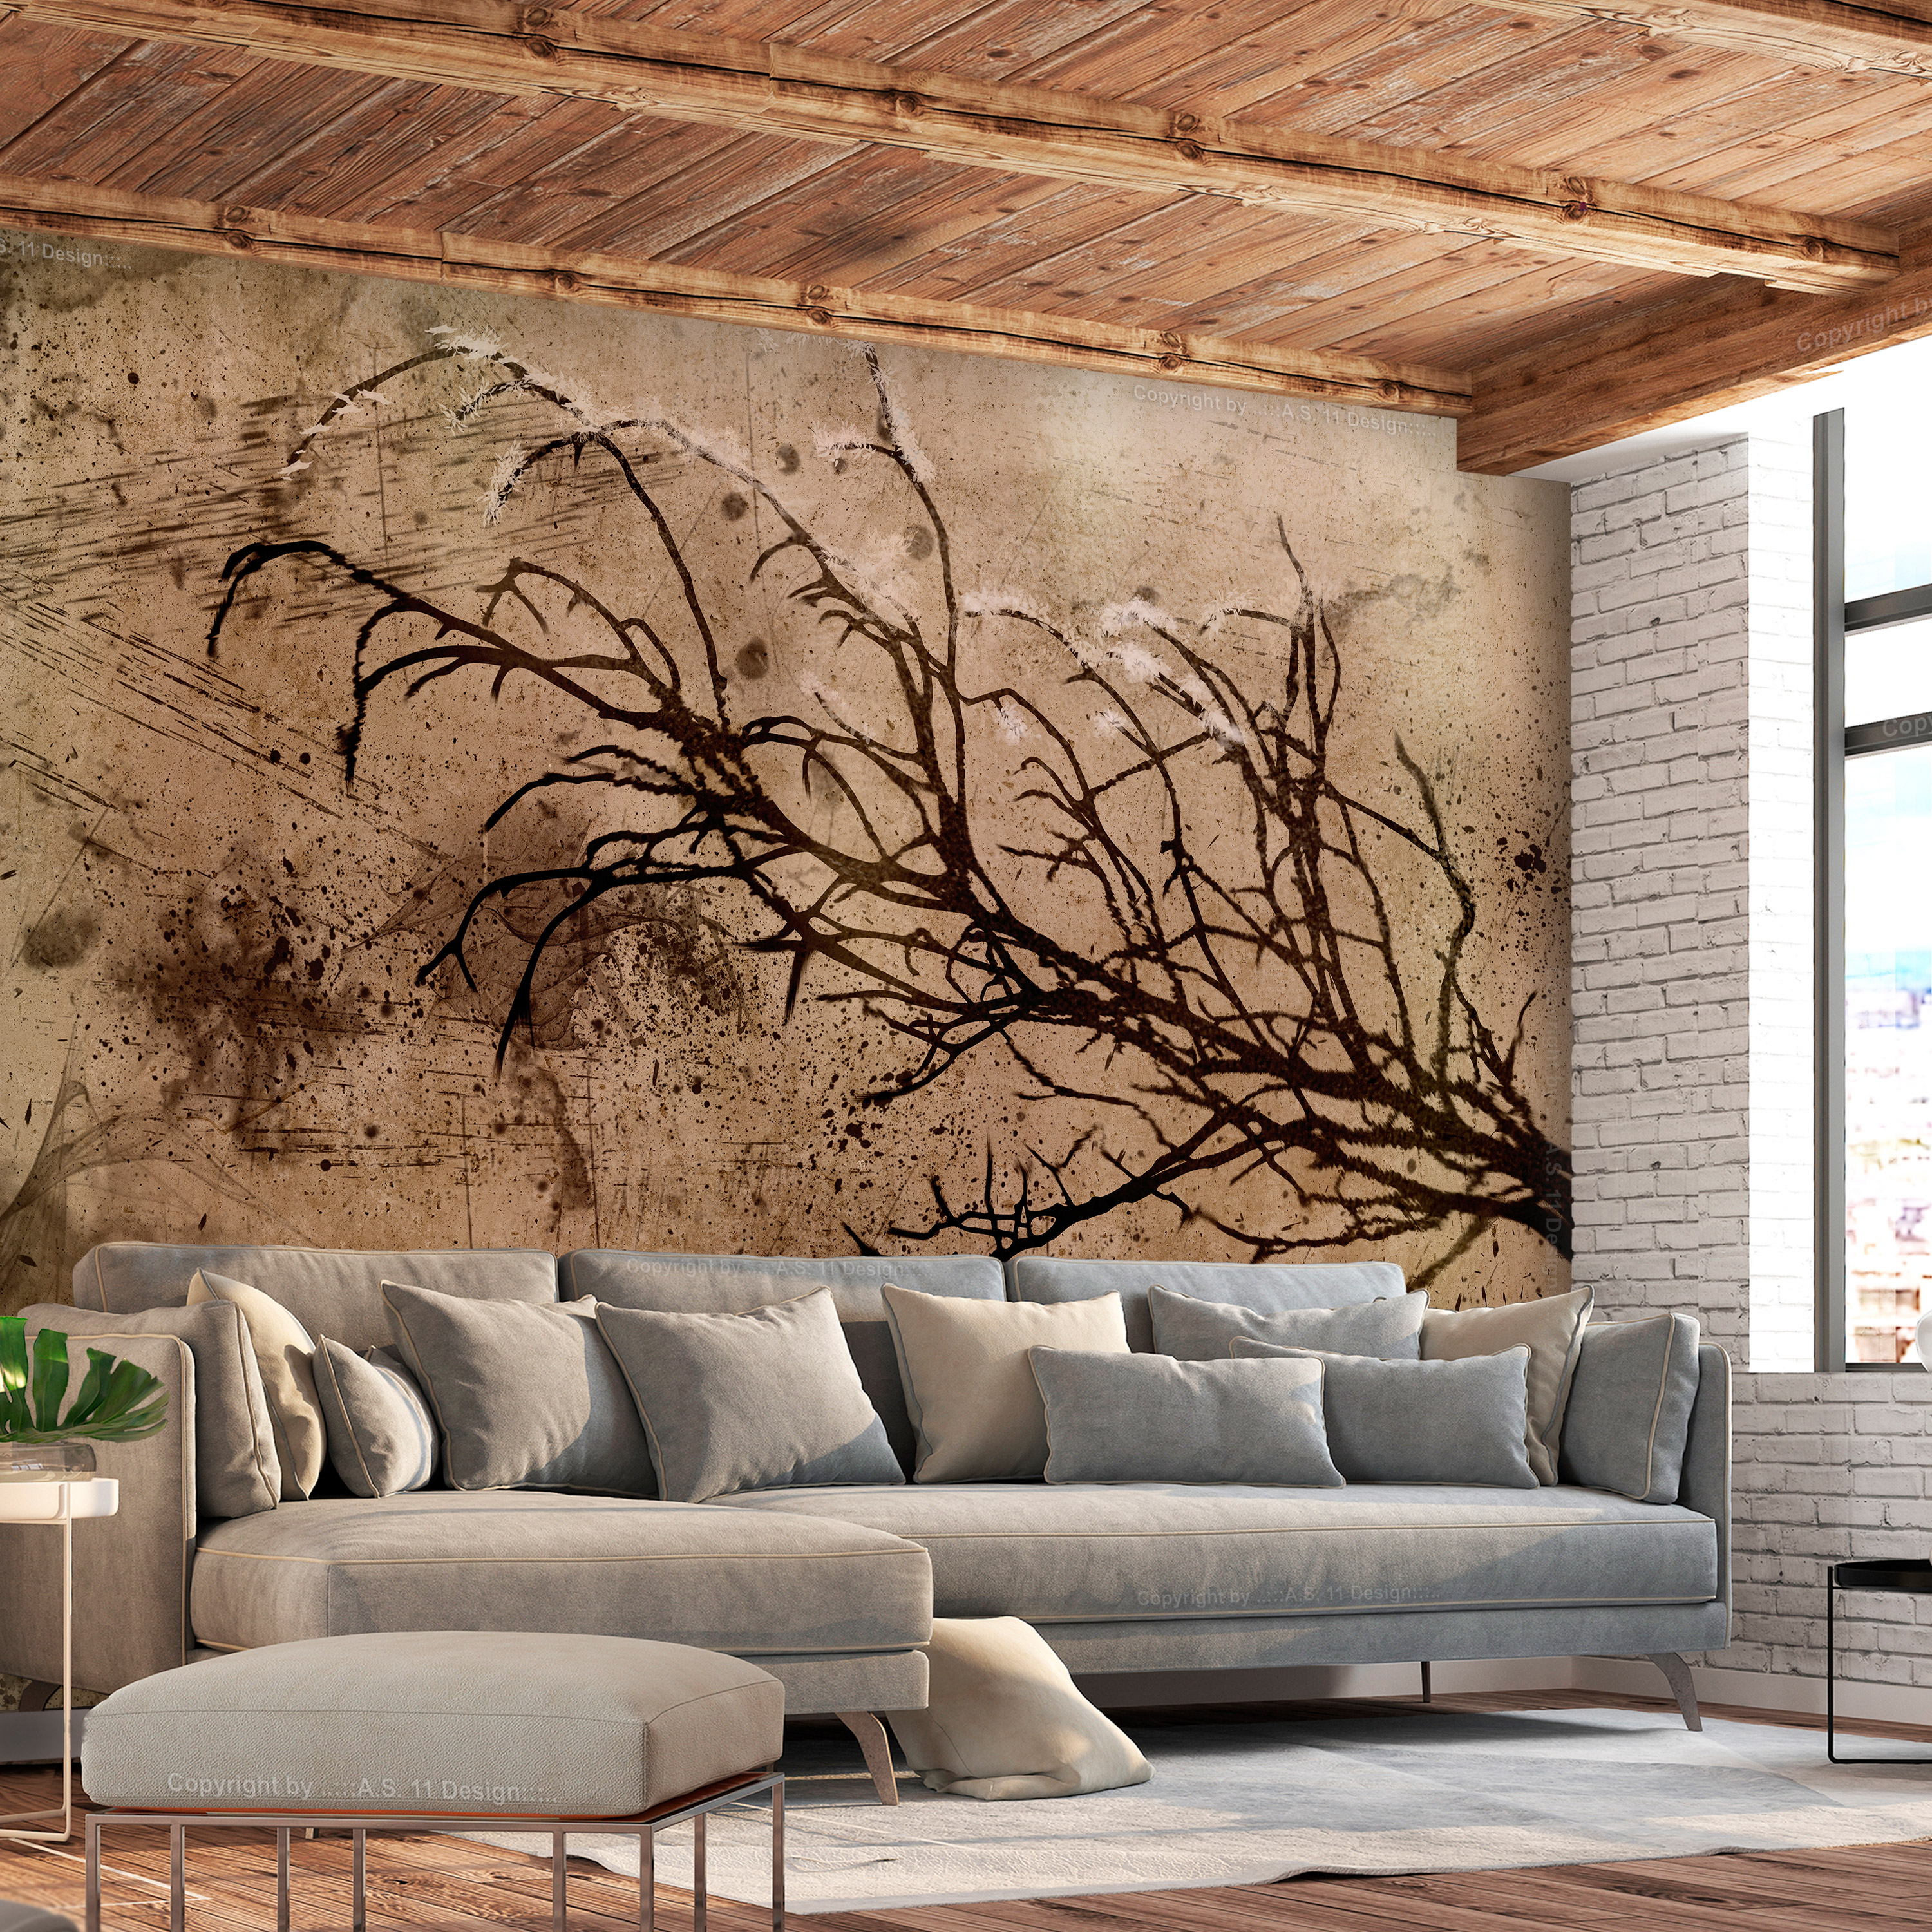 Self-adhesive Wallpaper - Rickety Cherry Tree - 196x140